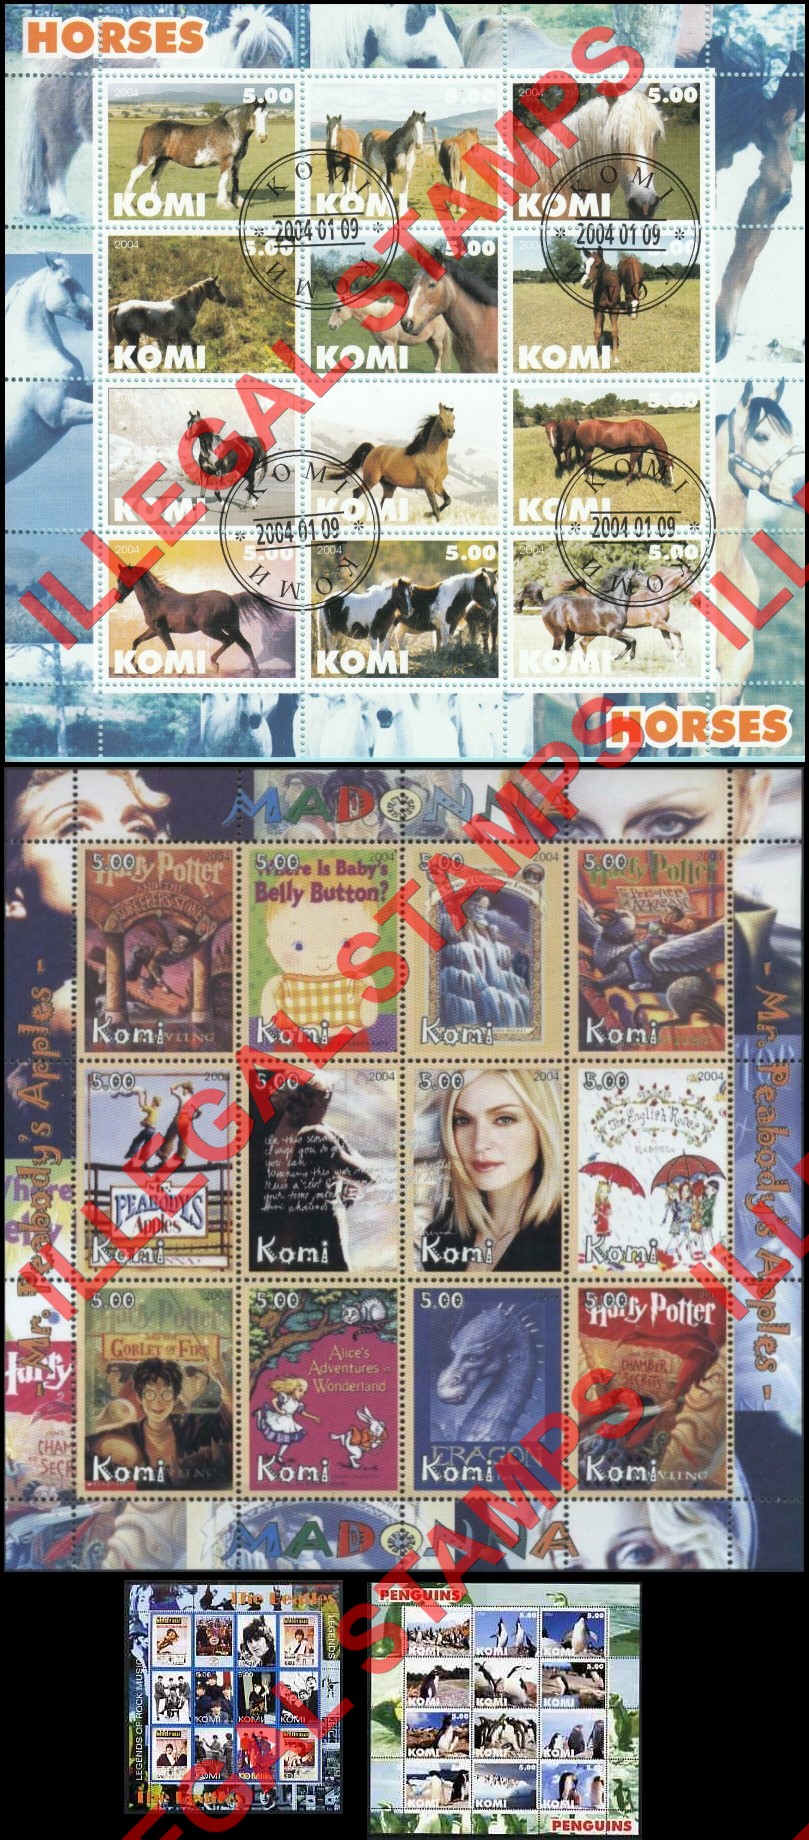 Komi Republic 2004 Counterfeit Illegal Stamps (Part 2)